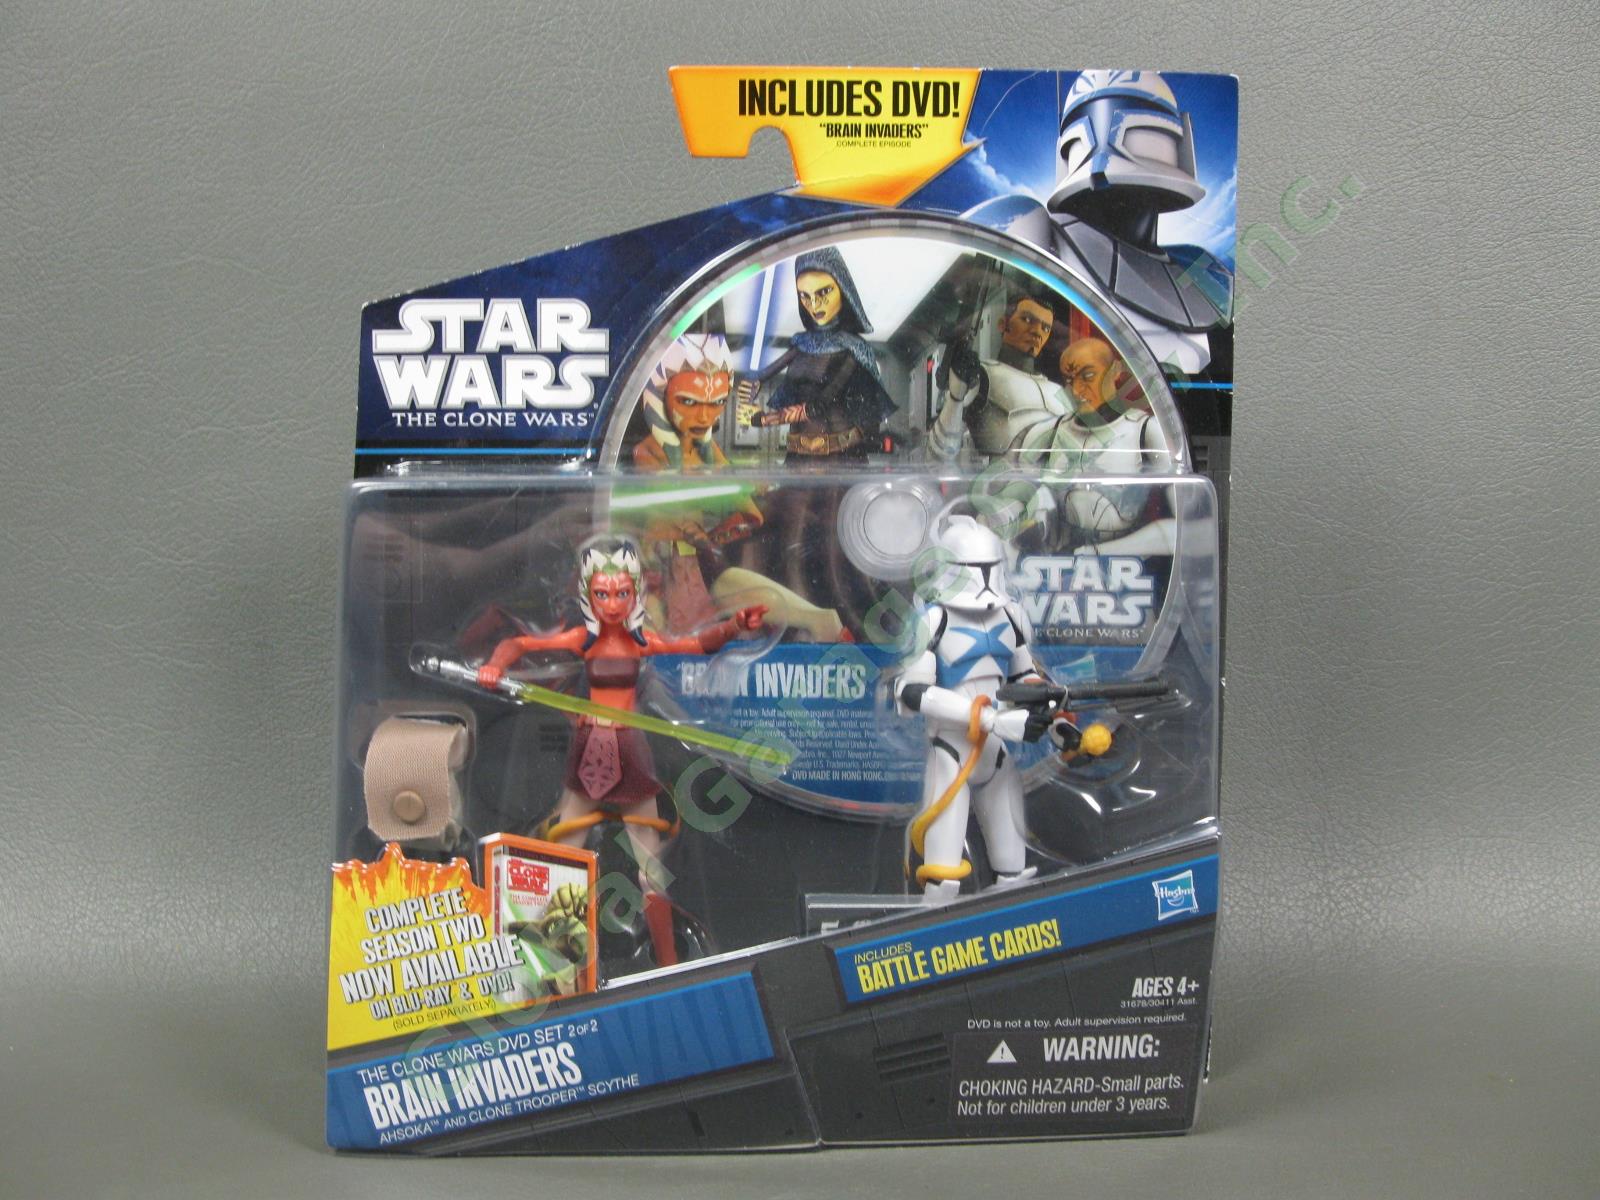 Star Wars The Clone Wars Brain Invaders Action Figure DVD Set Ahsoka Tano Scythe